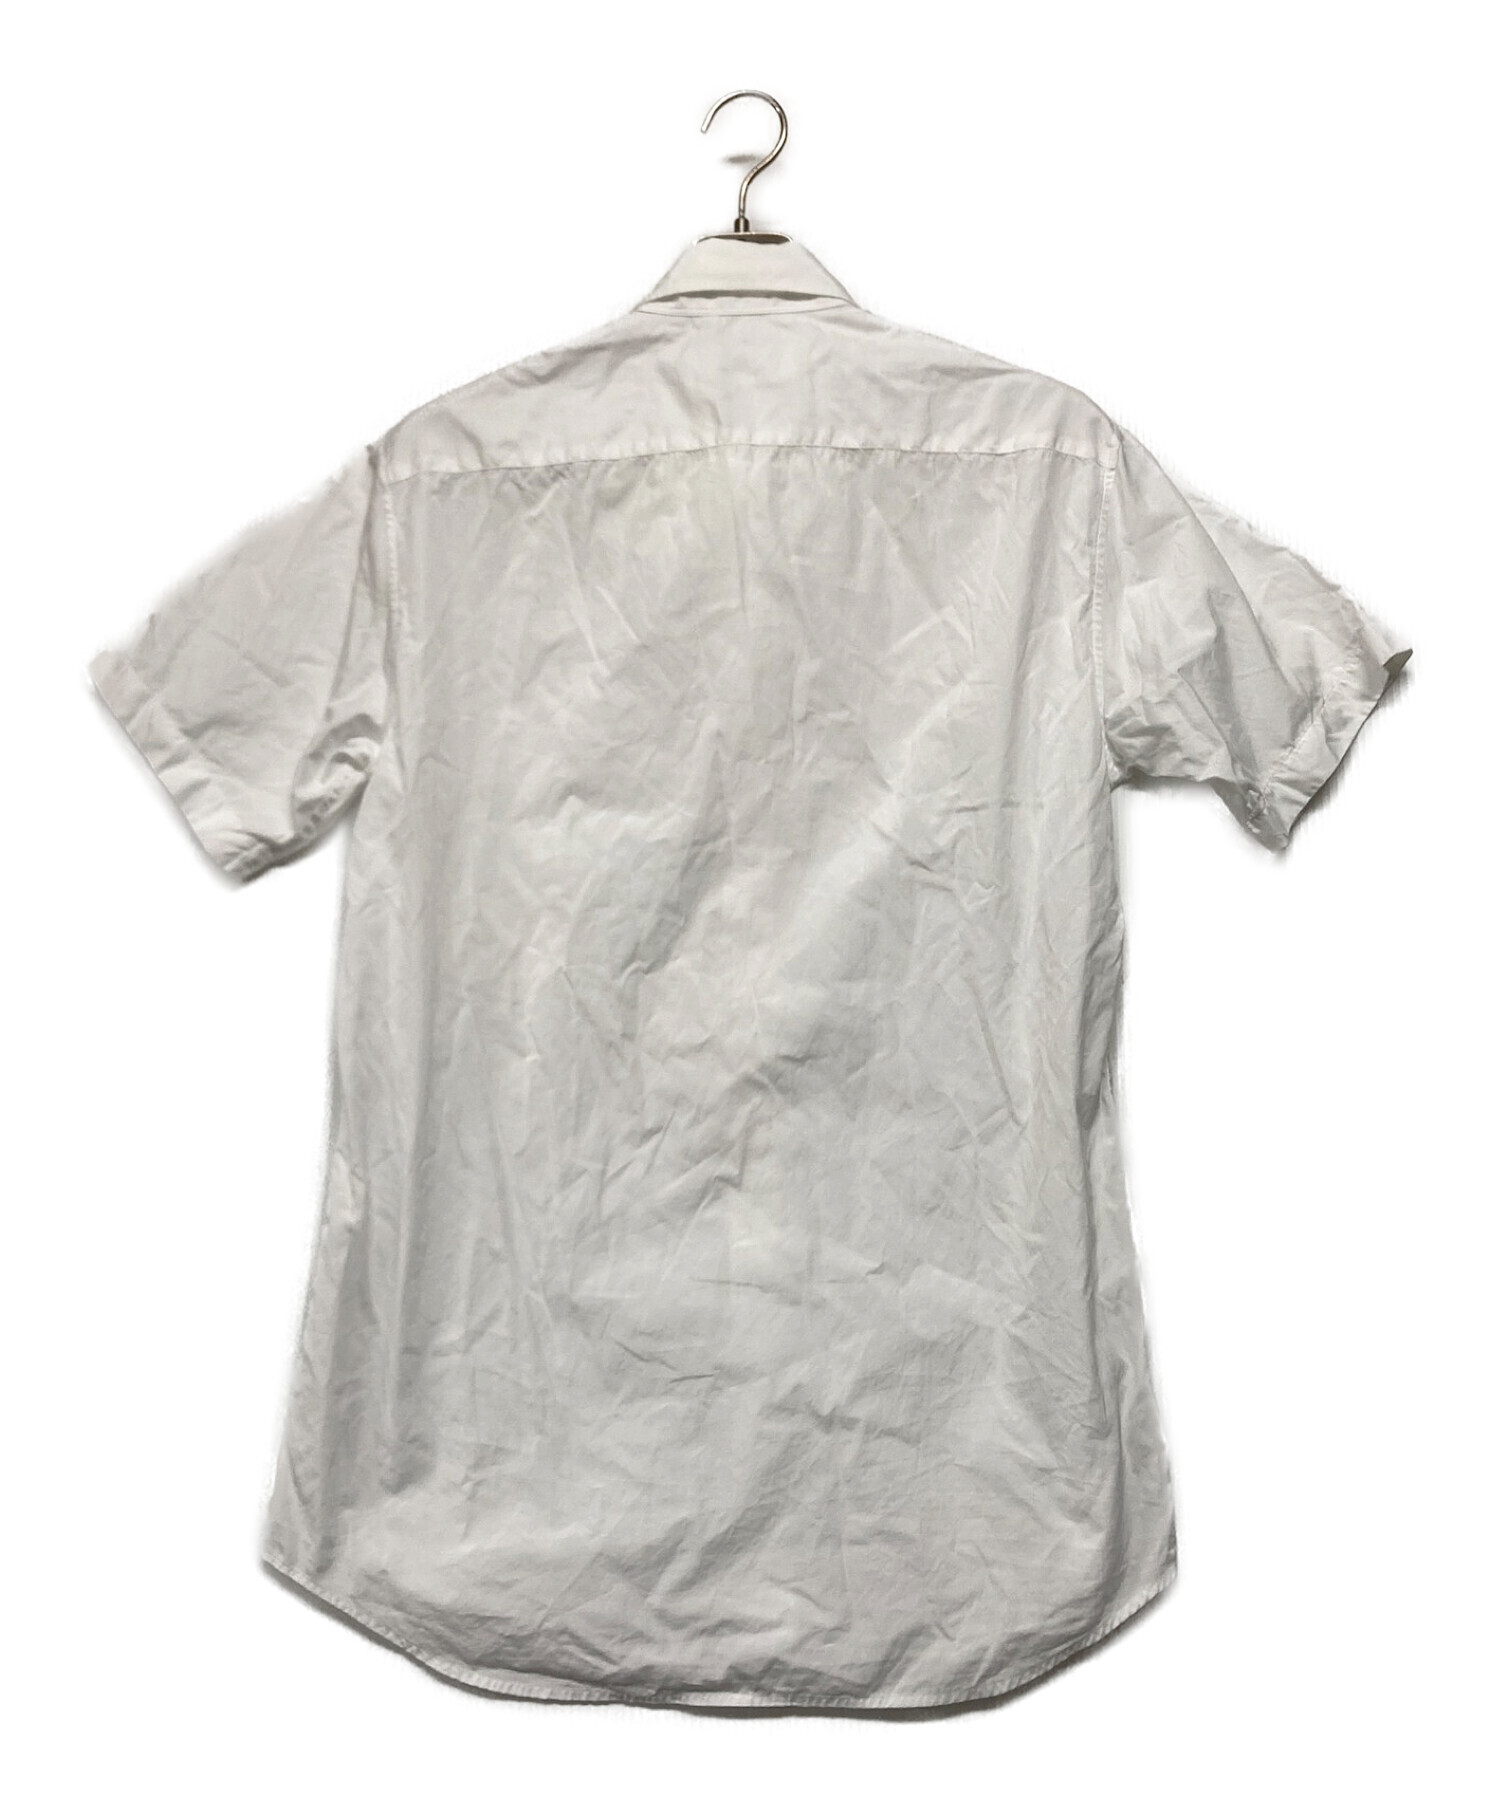 YOHJI YAMAMOTO (ヨウジヤマモト) 半袖シャツ ホワイト サイズ:SIZE 4